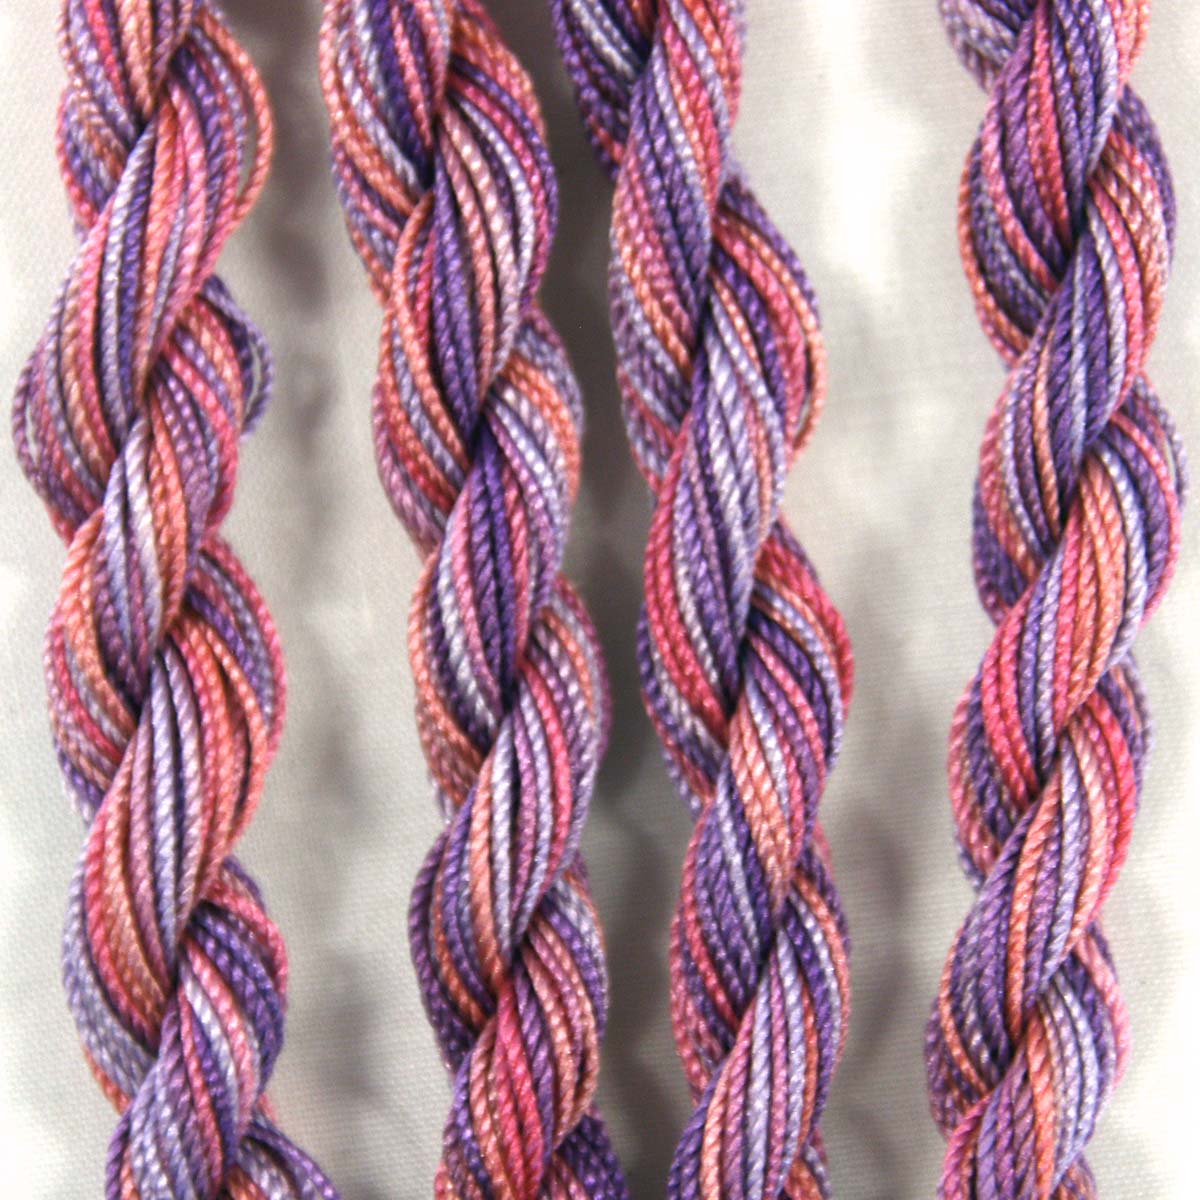 www.colourstreams.com.au Colour Streams Hand Dyed Silk Threads Silken Strands Ophir Exotic Lights Aurora Slow Stitch Embroidery Textile Arts Fibre DL 7 Fuschia DL 7 Purples Pinks